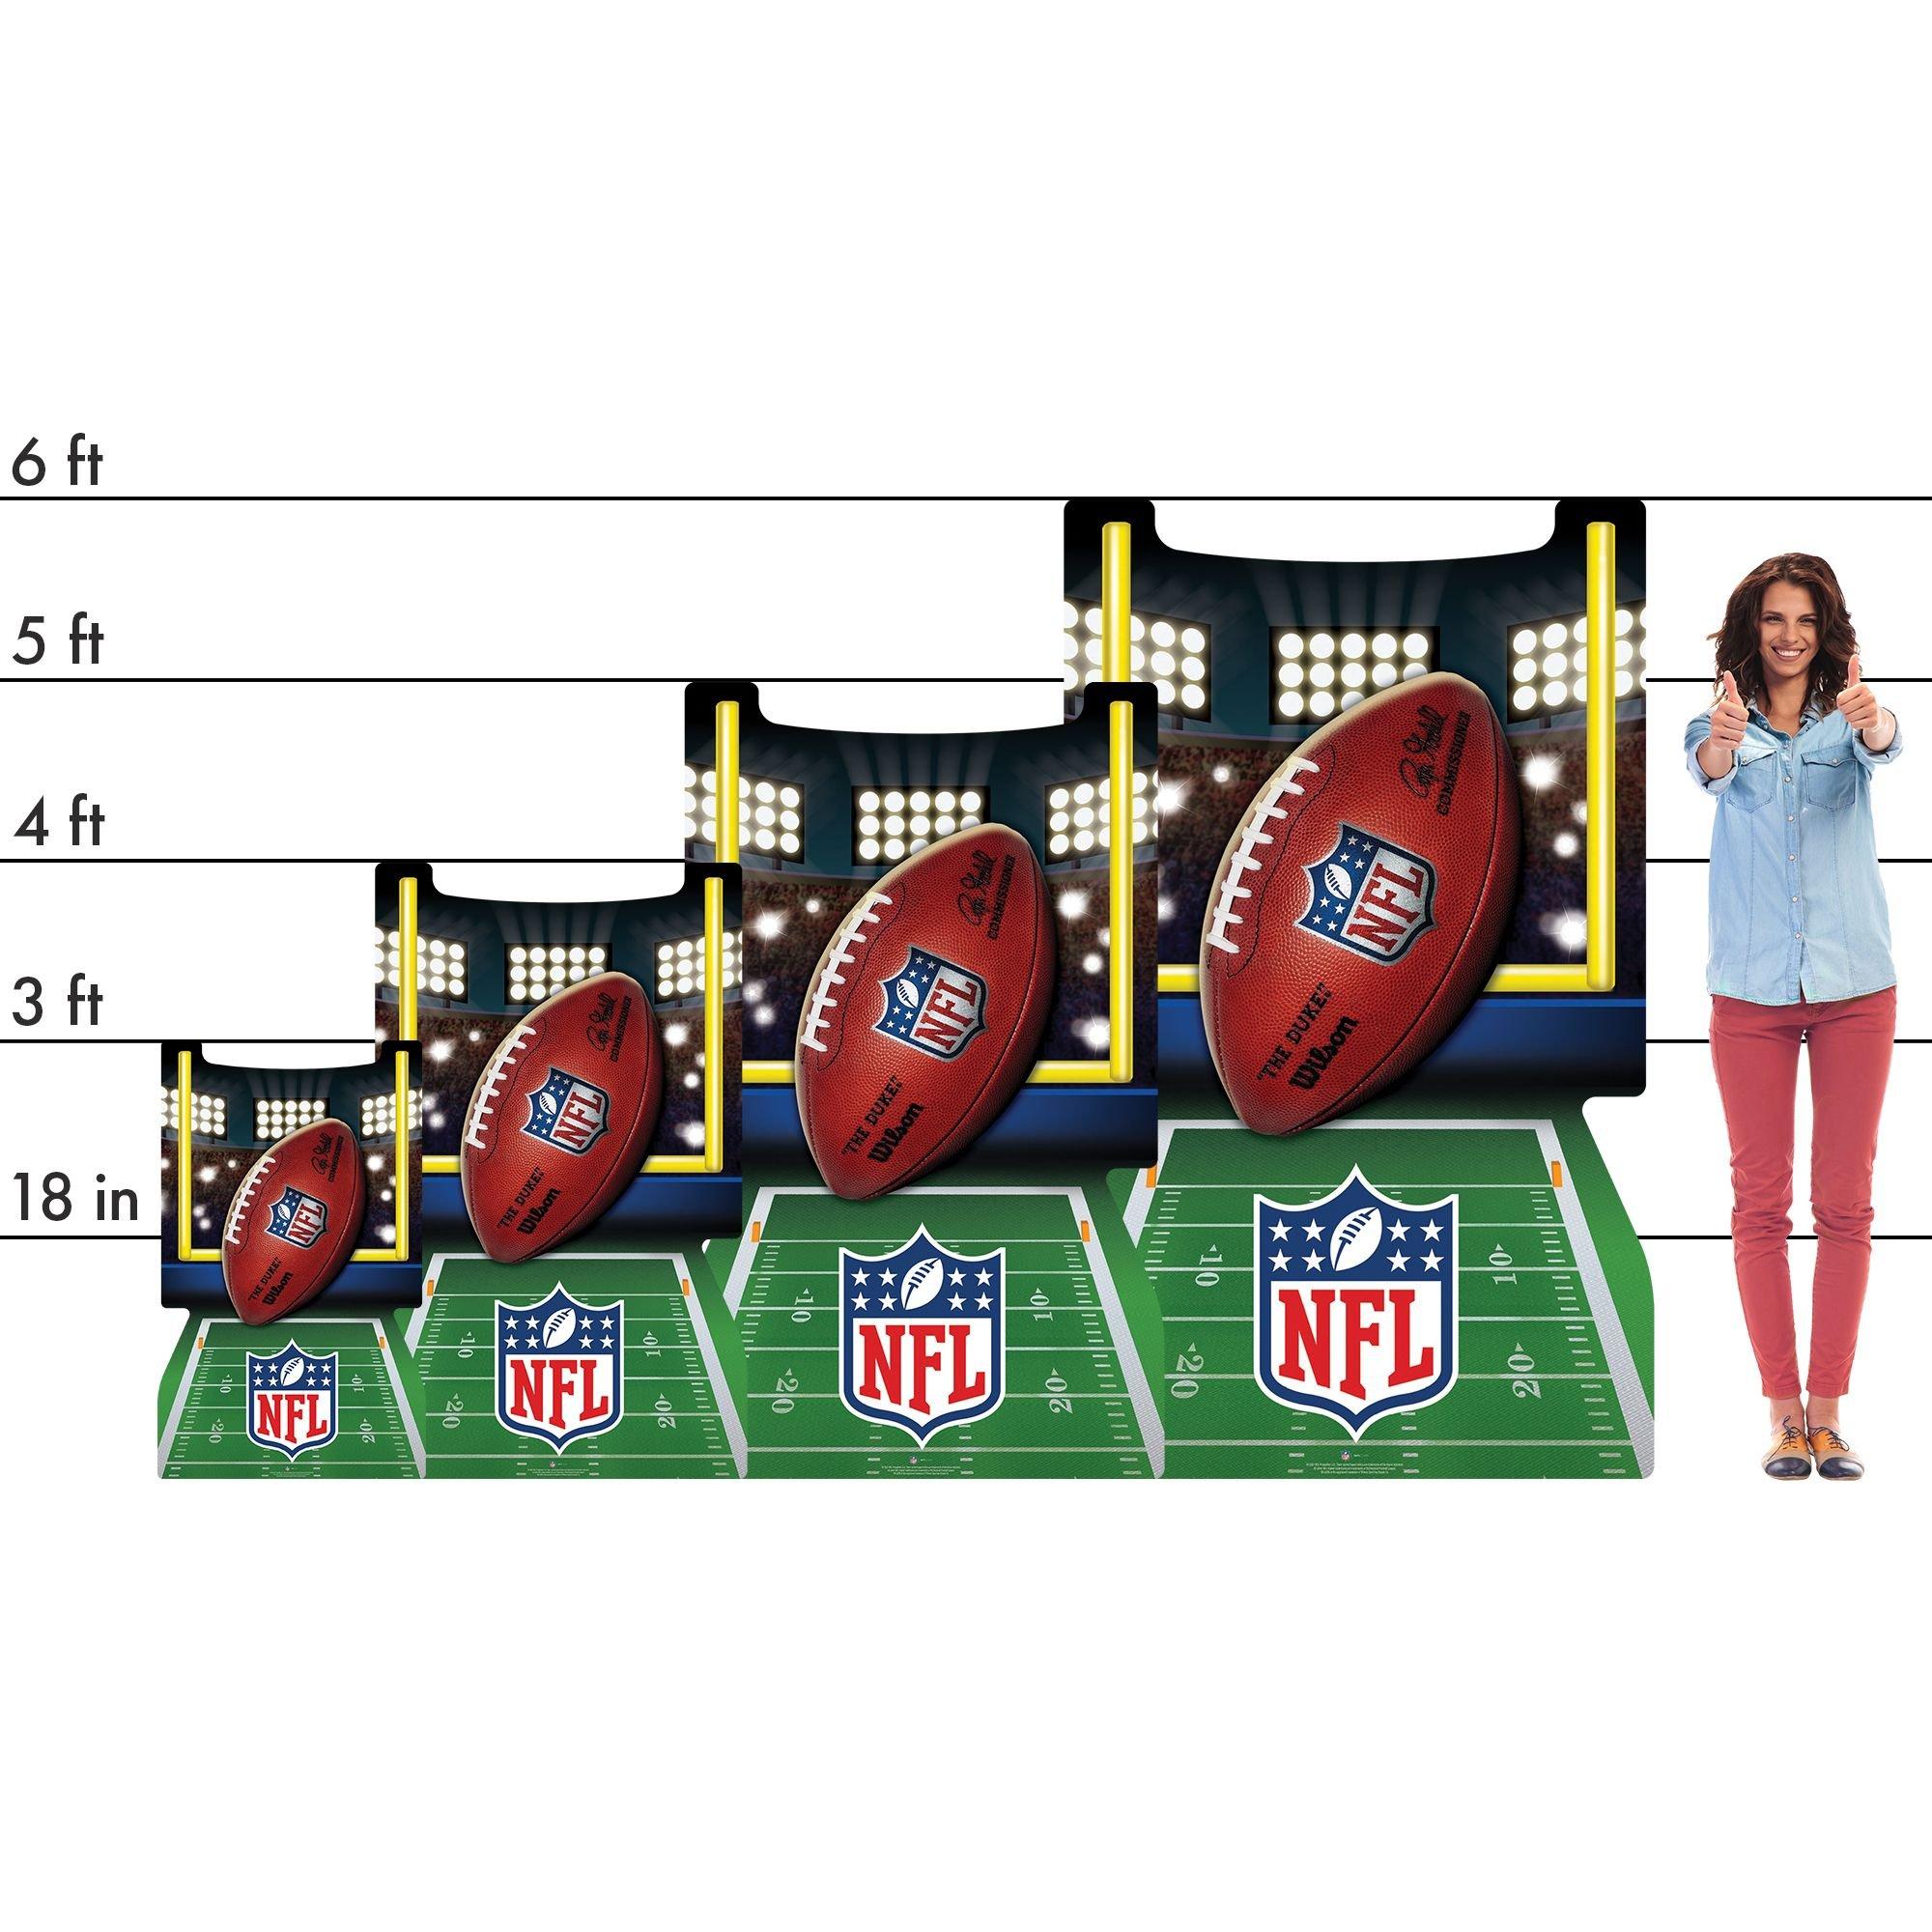 NFL Drive Life-Size Cardboard Cutout, 6ft